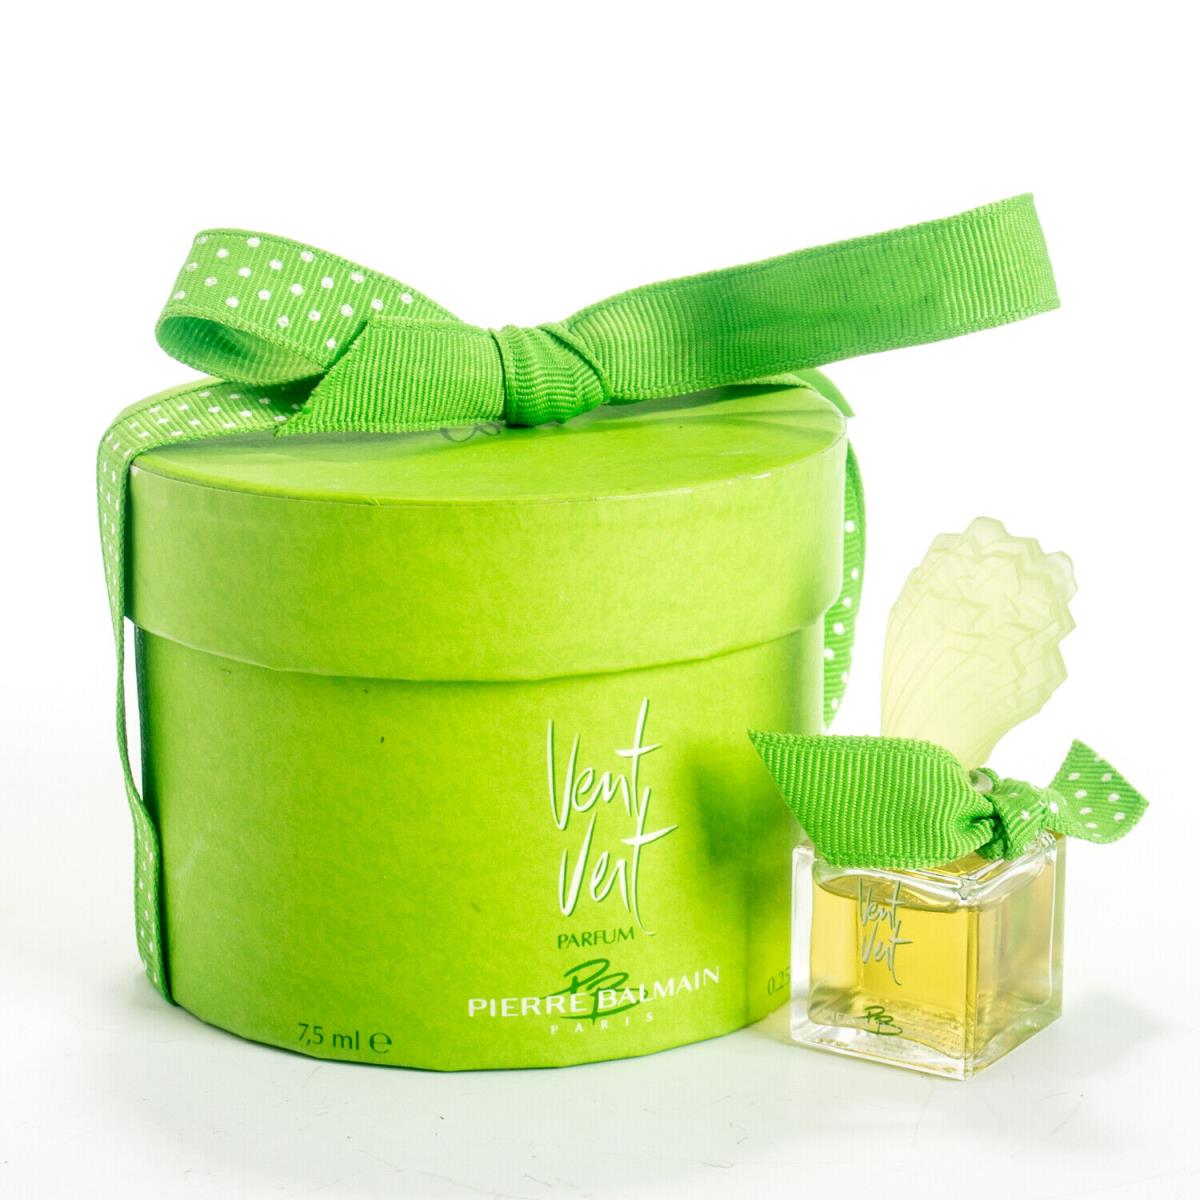 Balmain Vent Vert Perfume .25OZ 7.5ml Pure Parfum Extrait Box